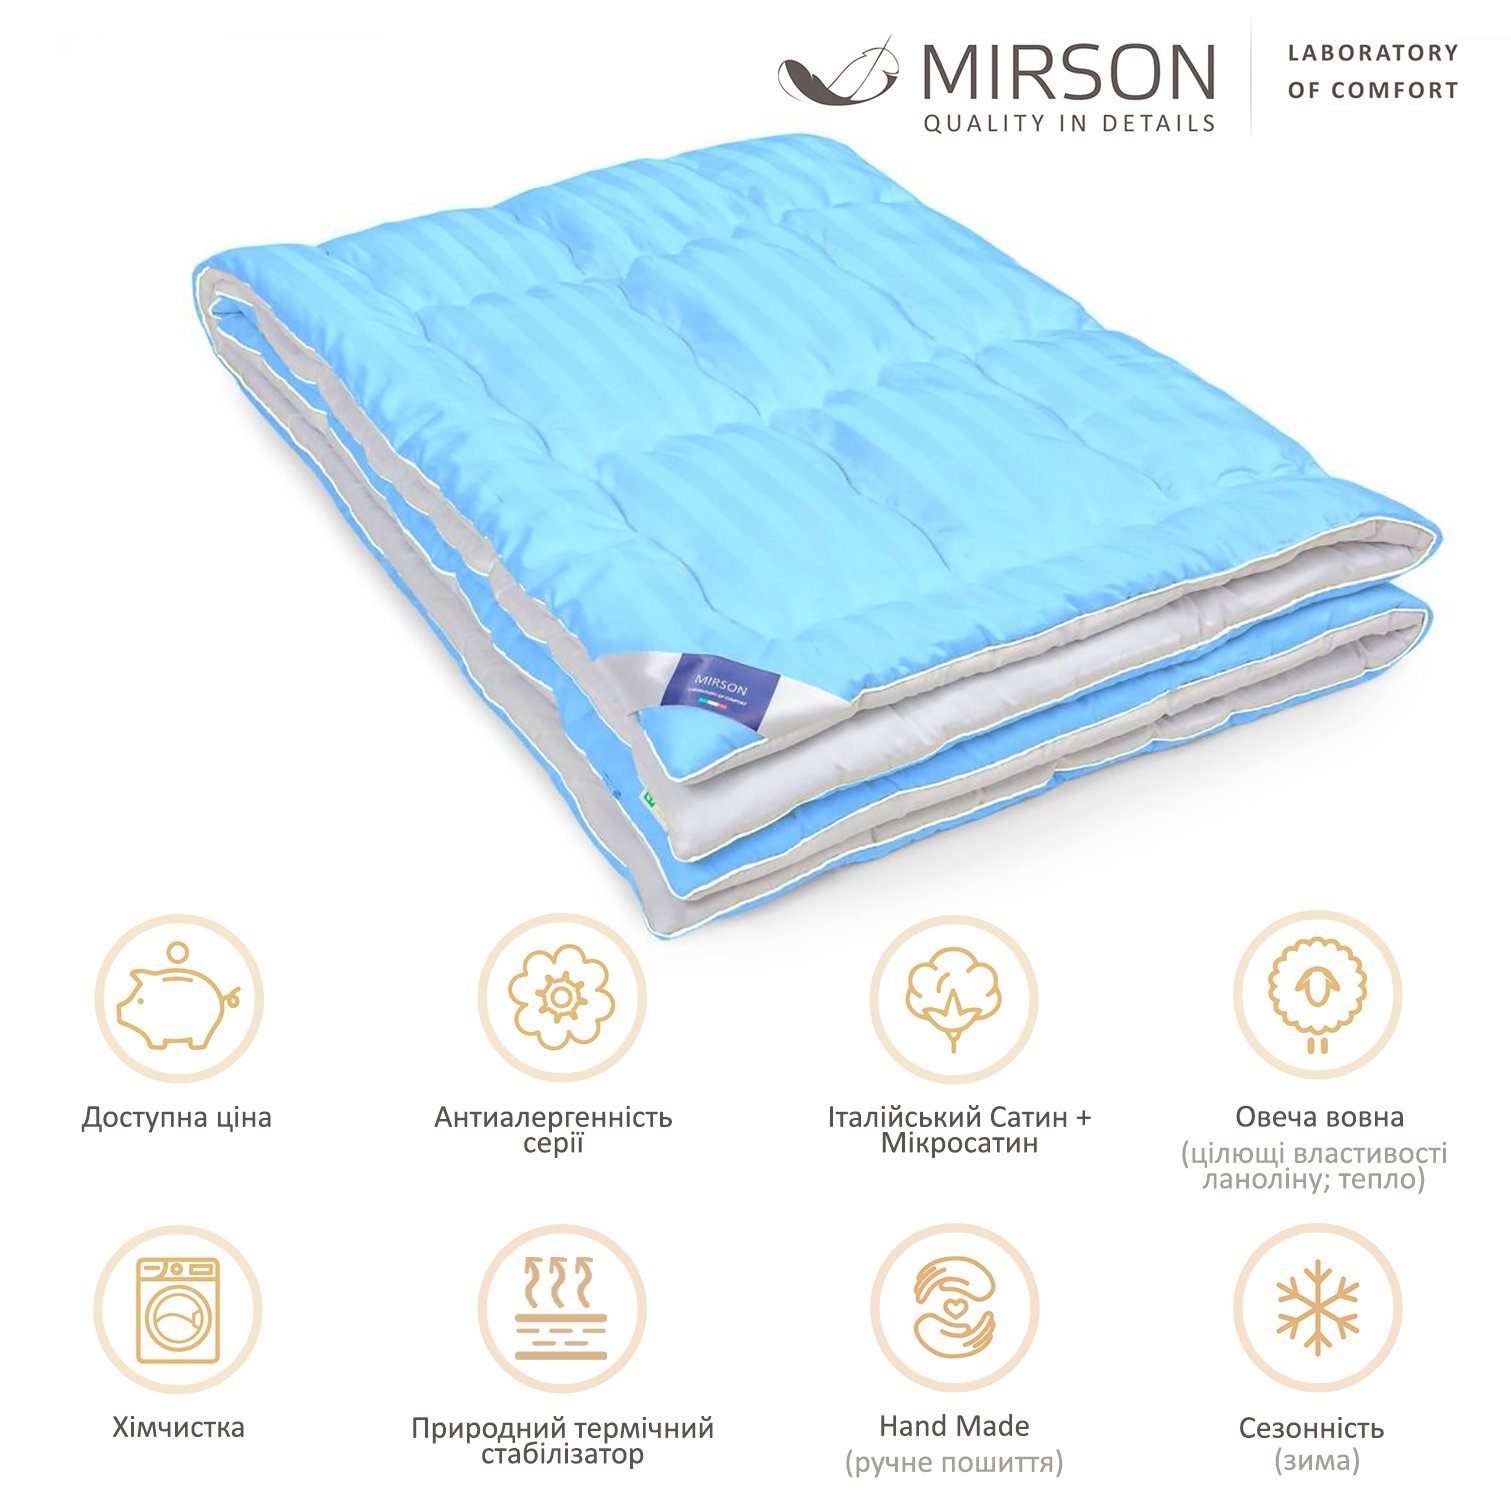 Одеяло шерстяное MirSon Valentino Hand Made №1356, зимнее, 220x240 см, бело-голубое - фото 5